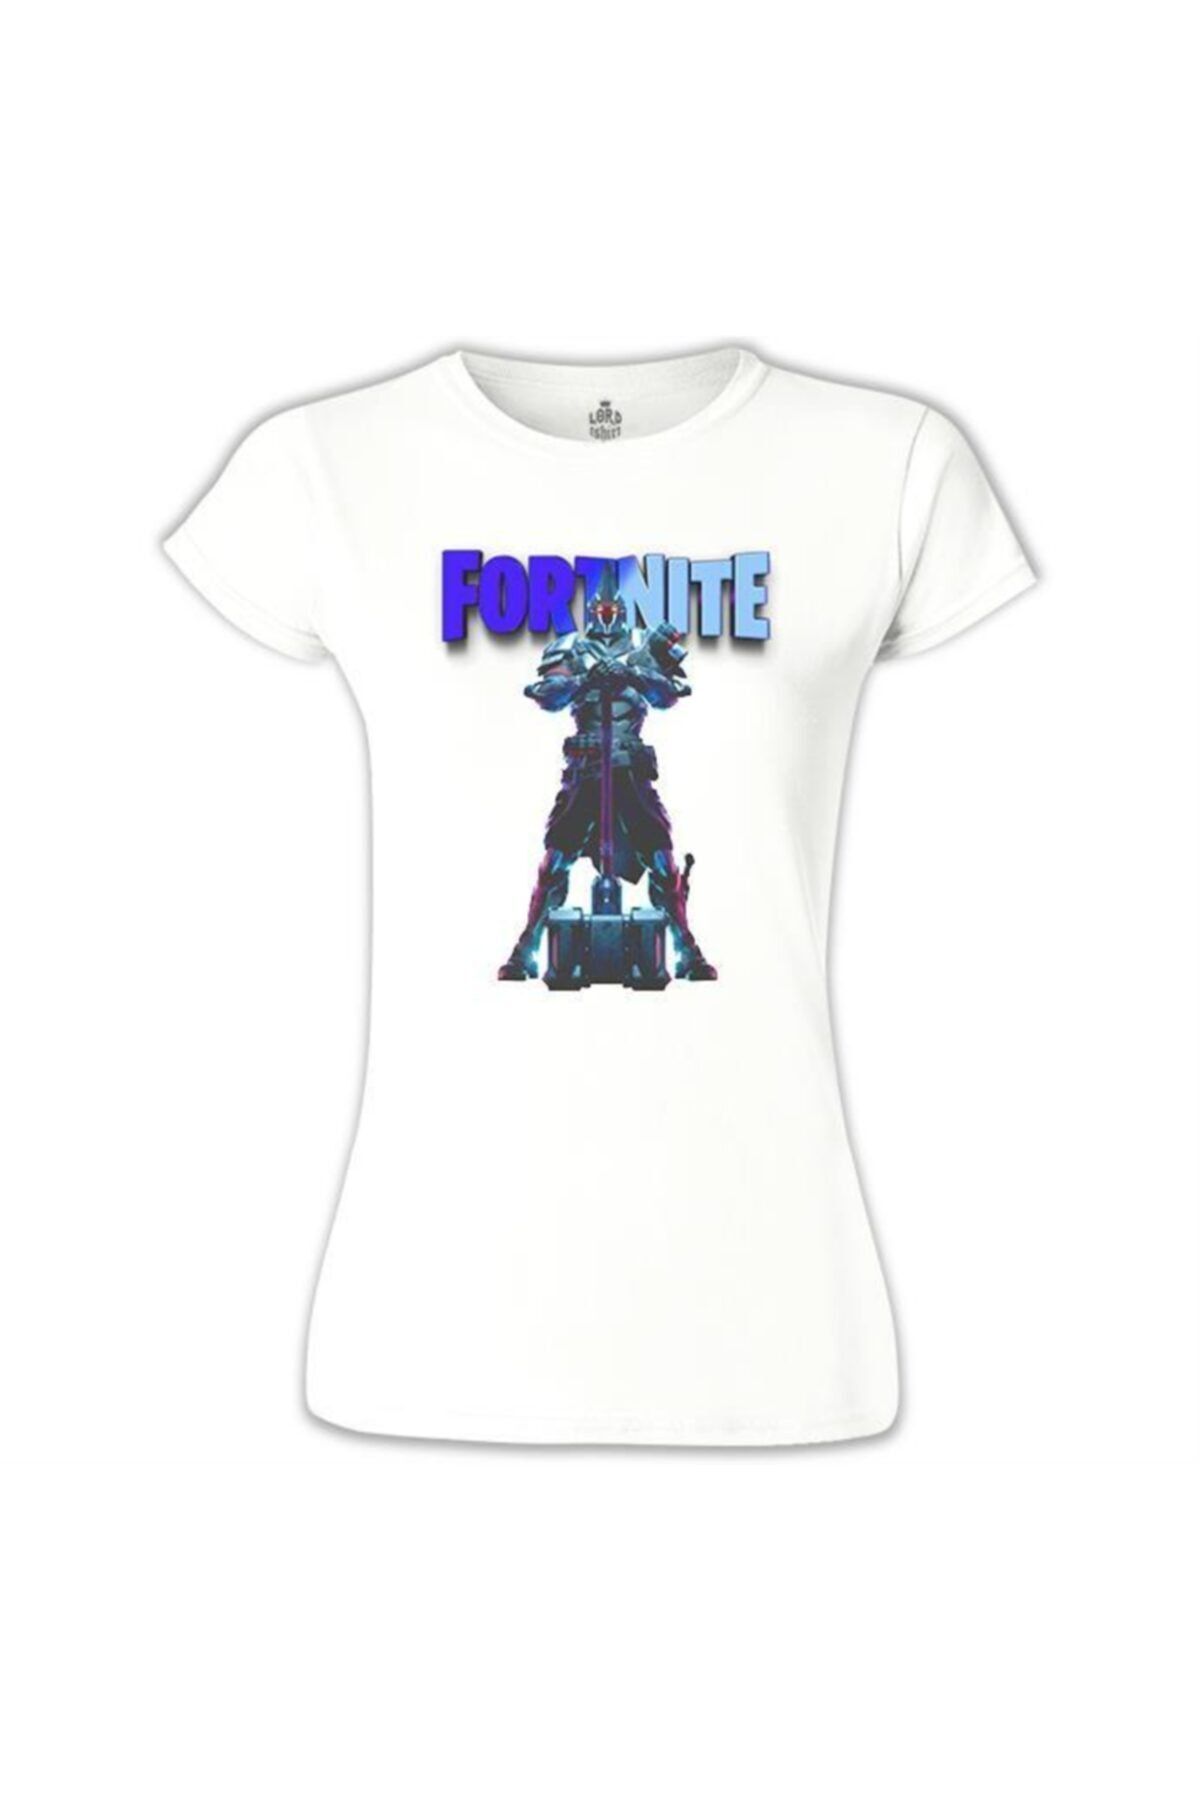 Lord T-Shirt Fortnite - Ultima Knight Blue Beyaz Kadın Tshirt